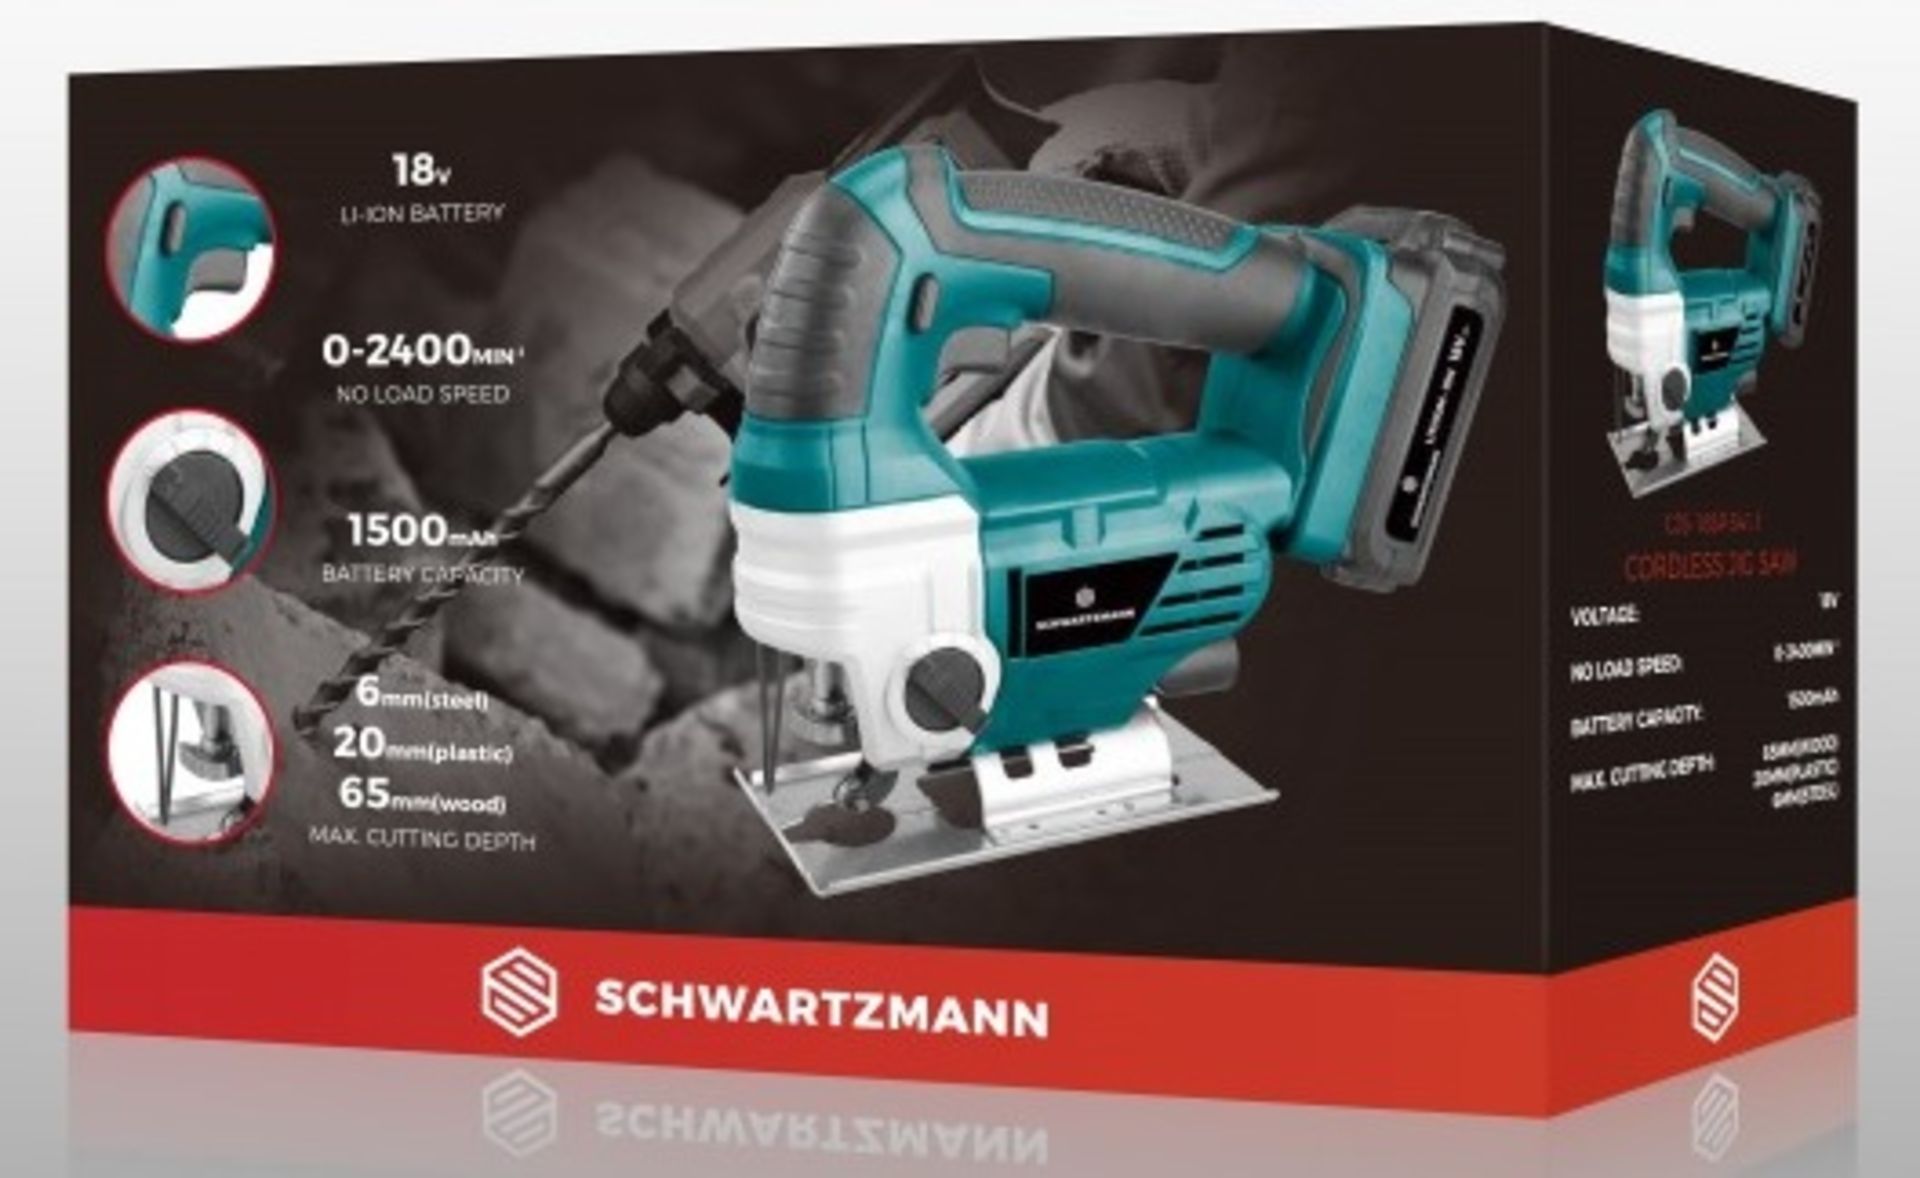 V Brand New Schwartzmann 18V Cordless Jigsaw - 1500mAh Battery Capacity -No Load Speed - 1hr Quick